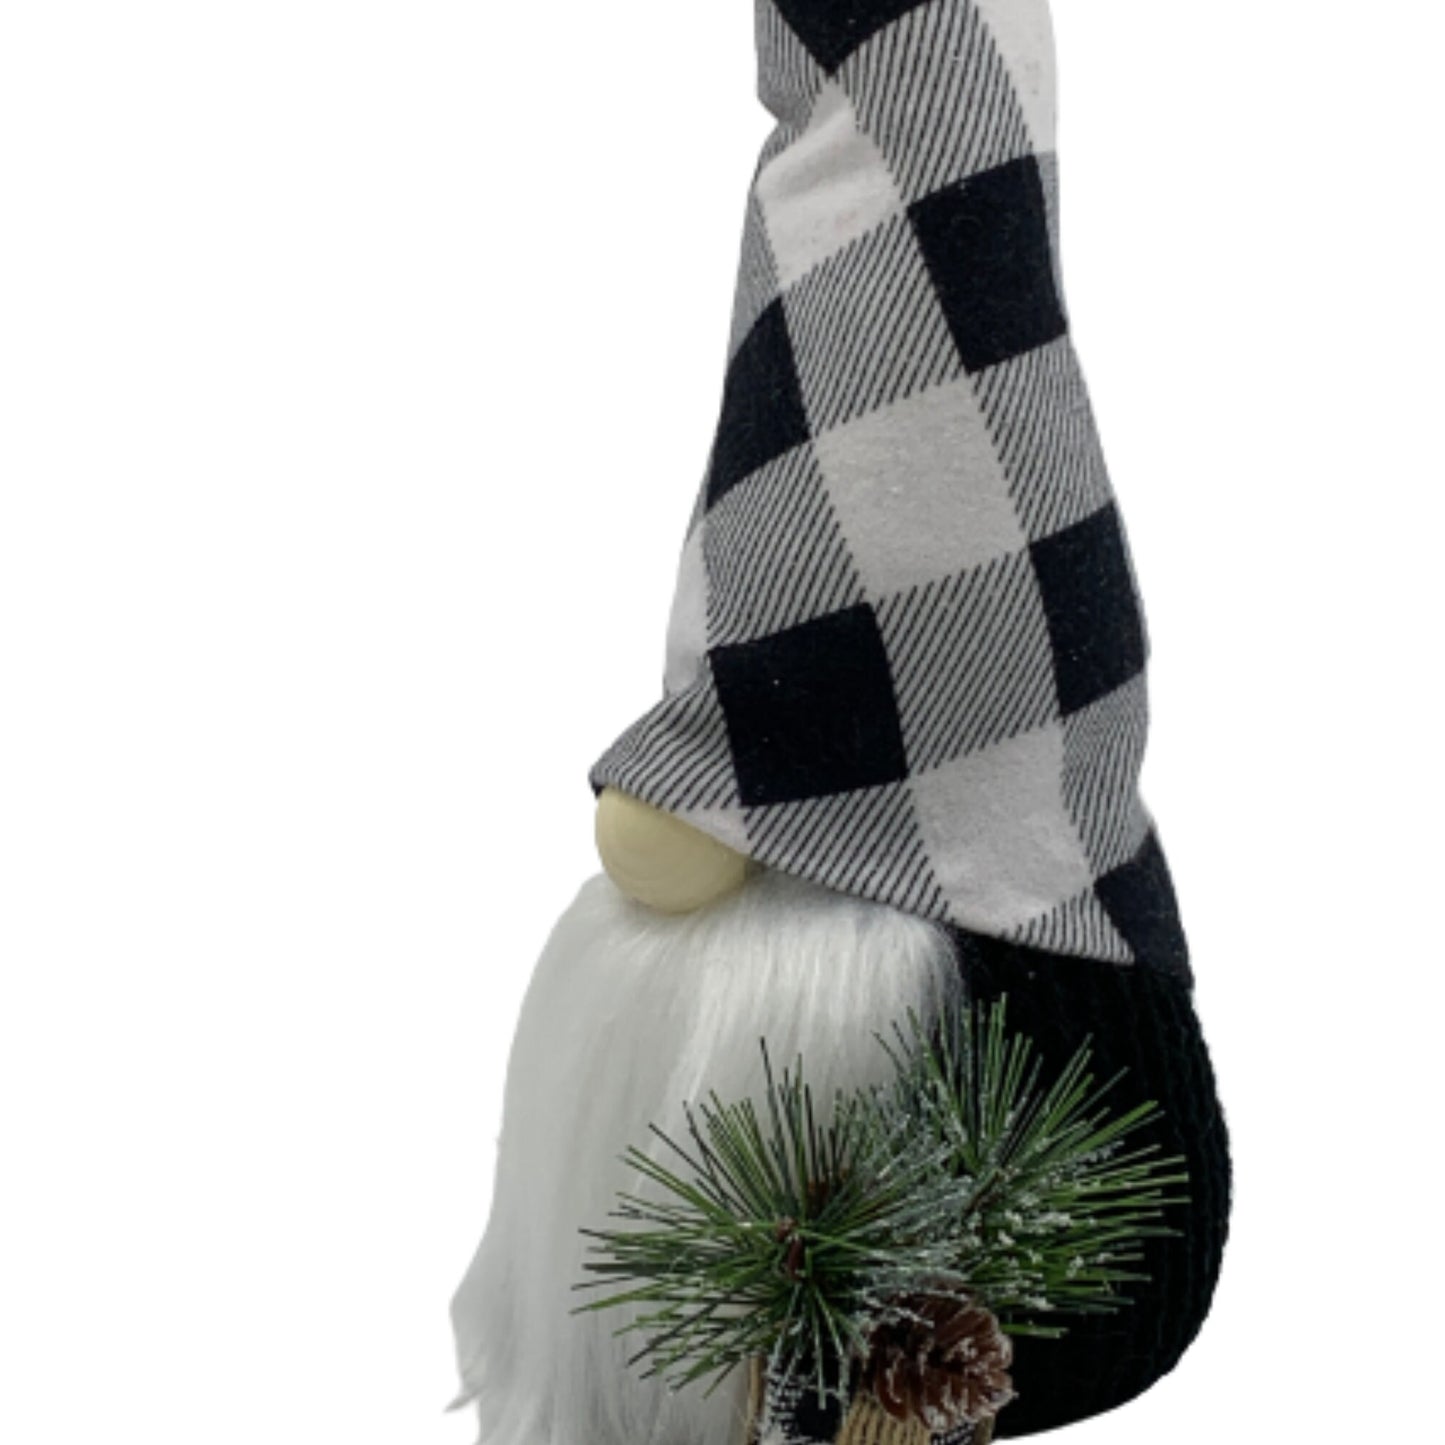 Black & White Buffalo Plaid Christmas Gnome / Holiday Tiered Tray Decor / Winter Gnome Decorations